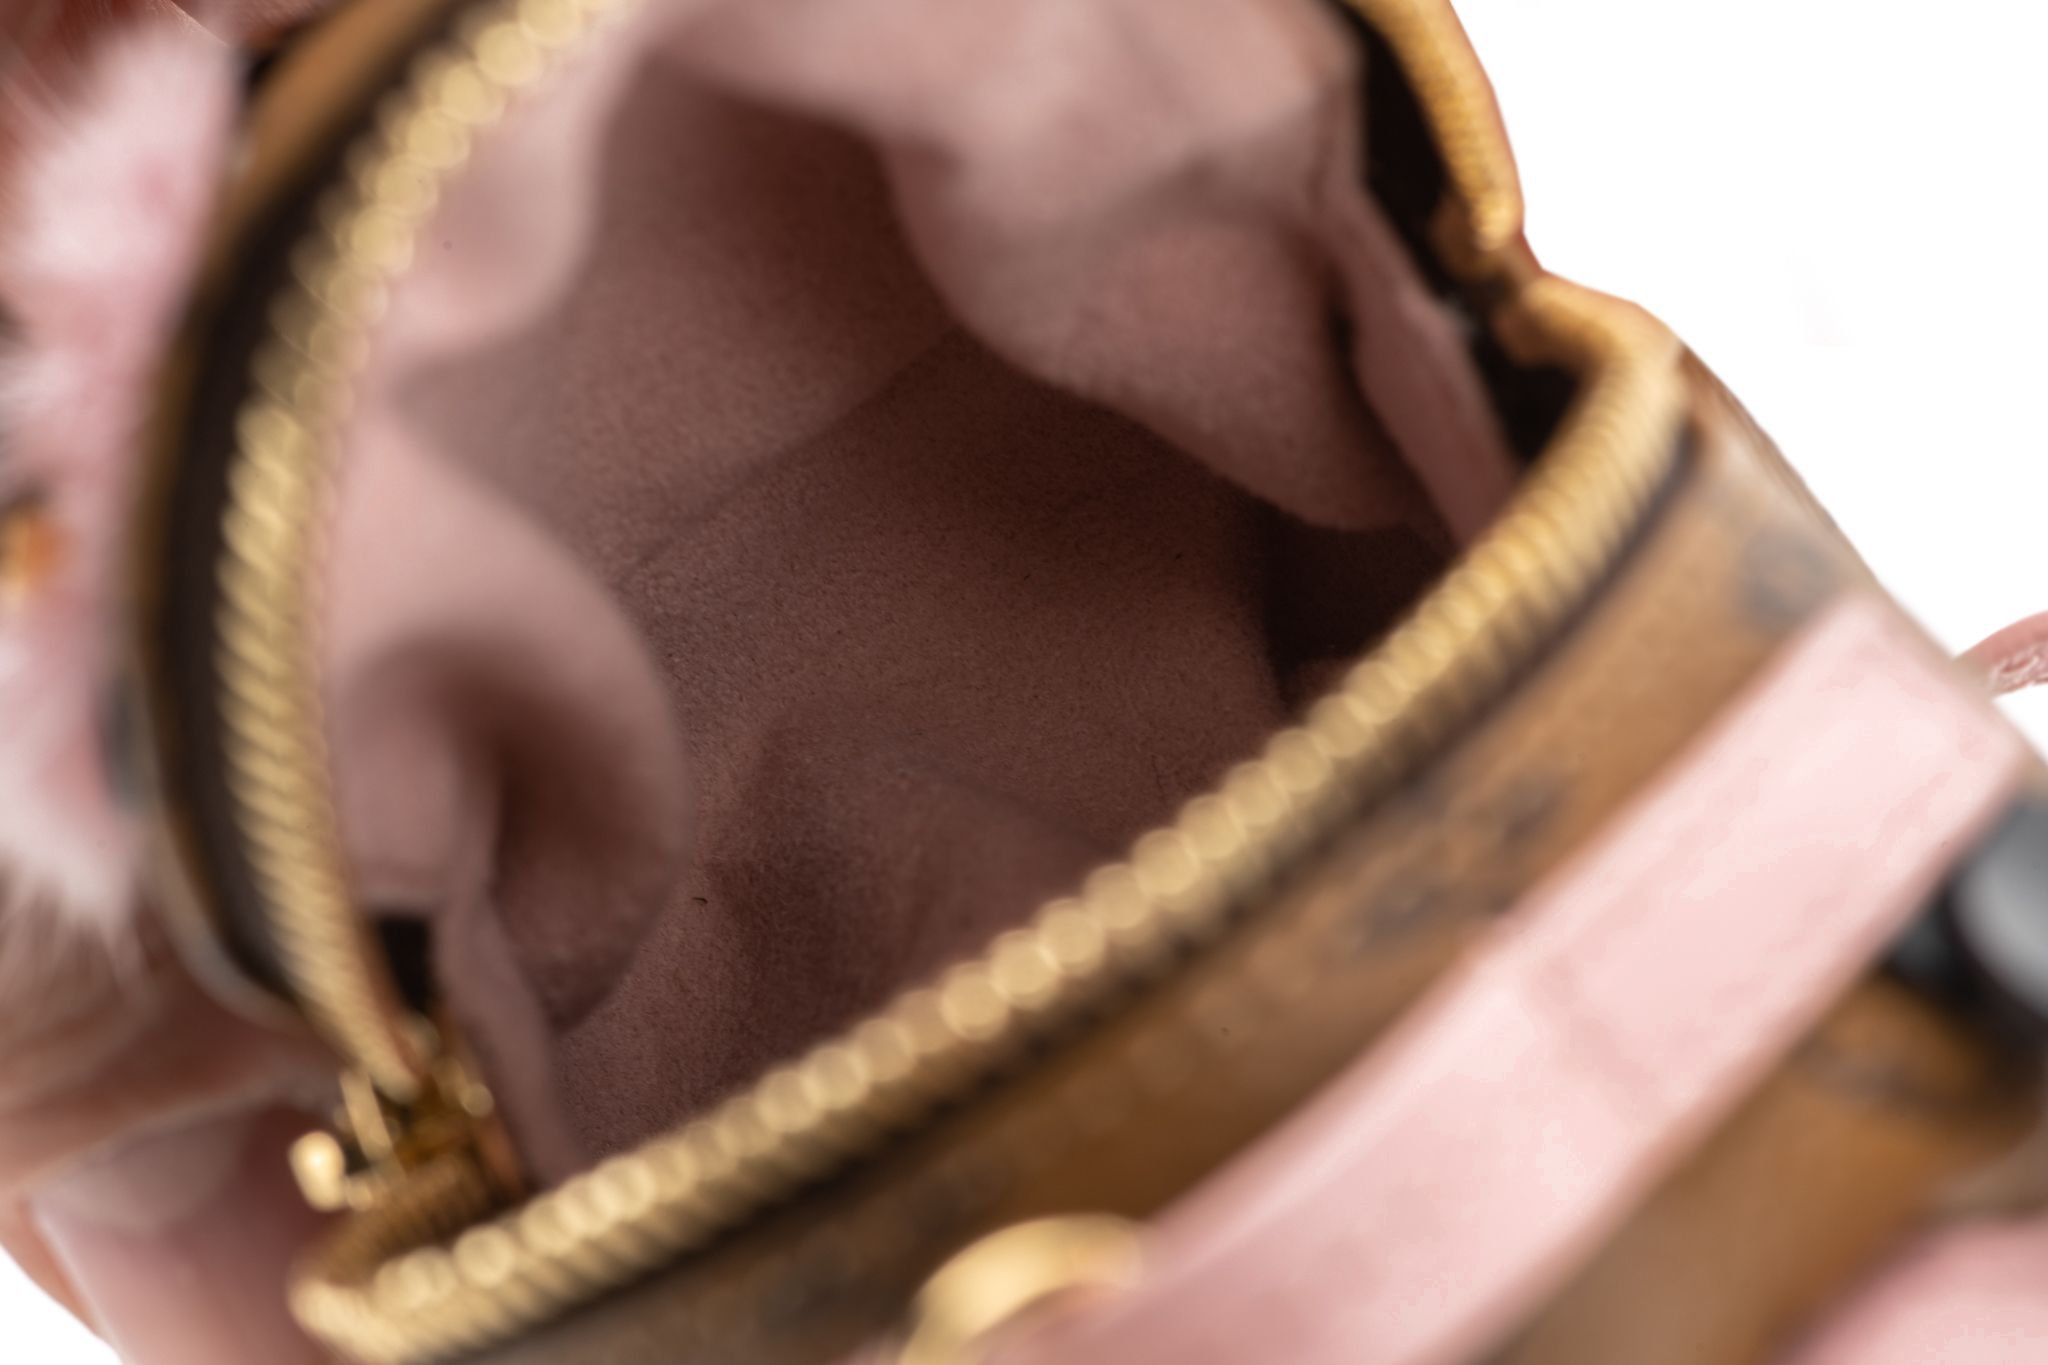 New in Box Rare Louis Vuitton Mini Owl Backpack Charm